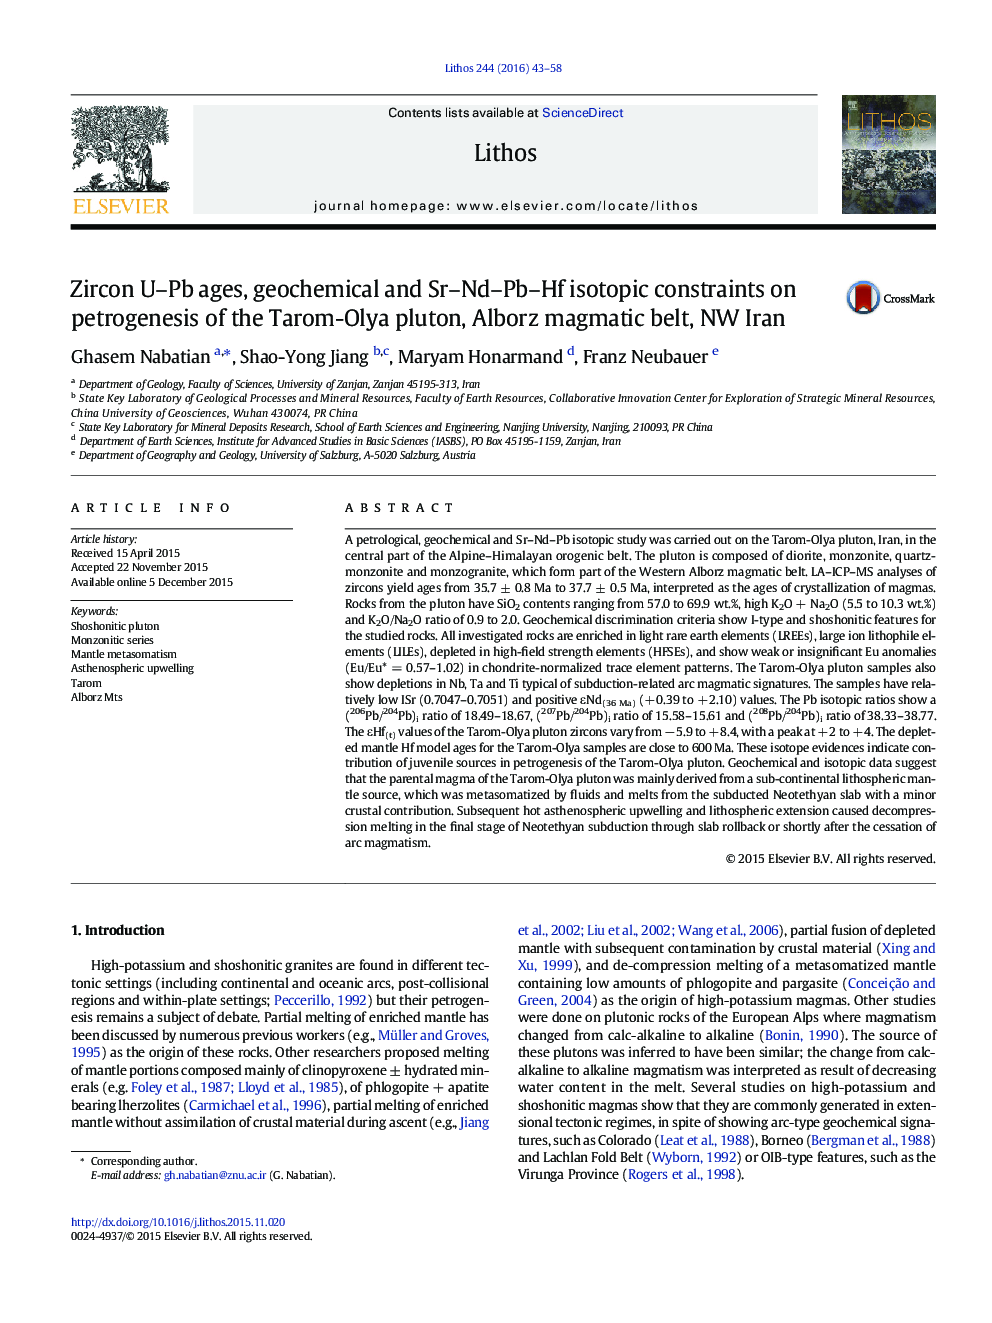 Zircon U–Pb ages, geochemical and Sr–Nd–Pb–Hf isotopic constraints on petrogenesis of the Tarom-Olya pluton, Alborz magmatic belt, NW Iran